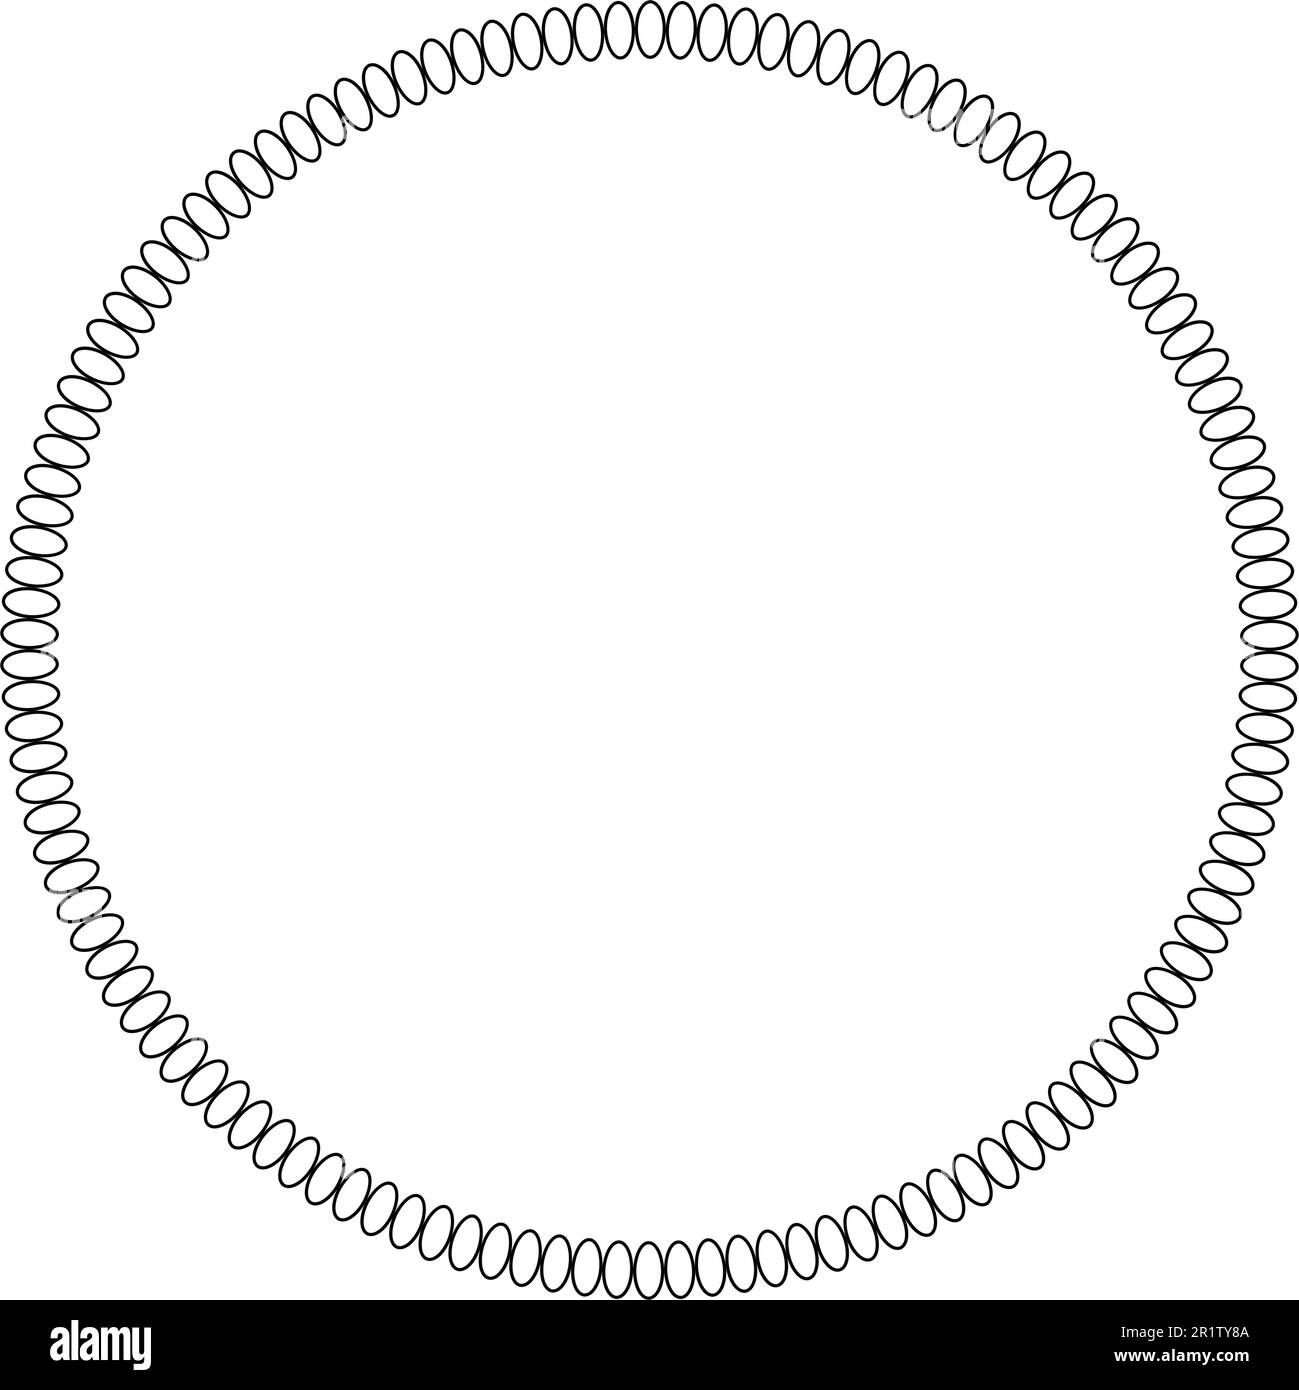 Circle frame round border design shape icon Vector Image